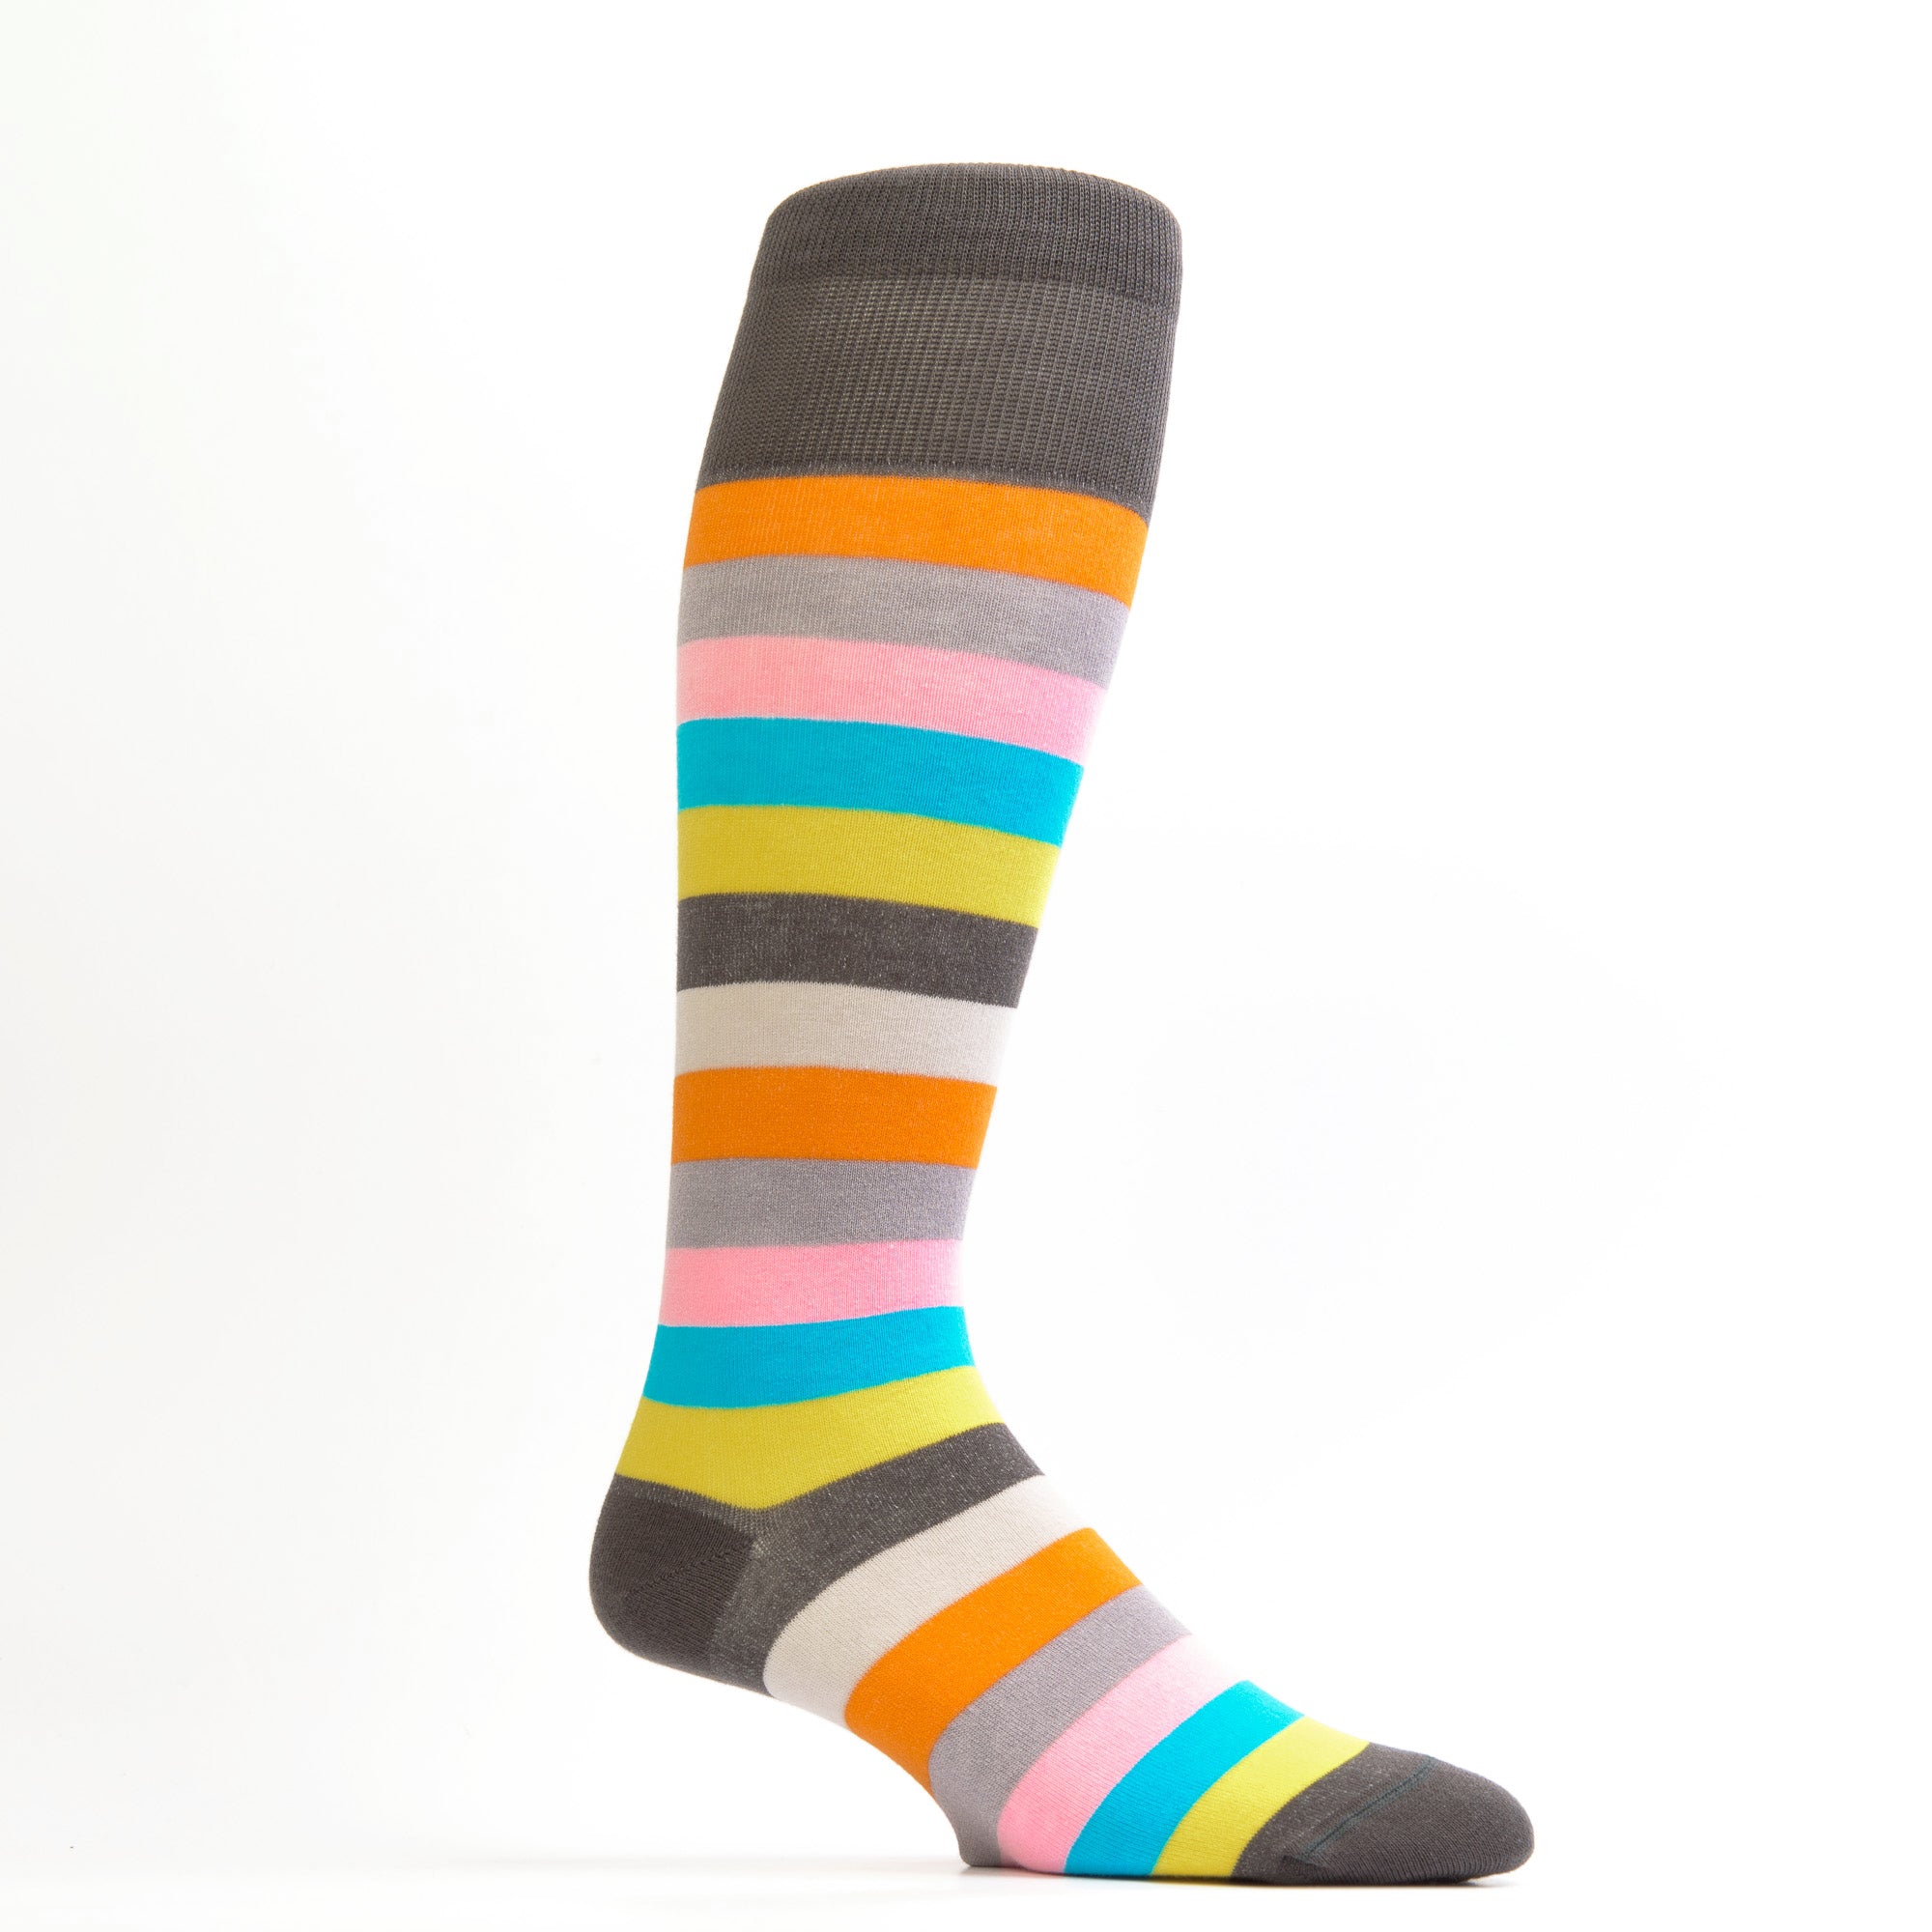 Zicci Women's 5-Pair Lines Knee High Socks